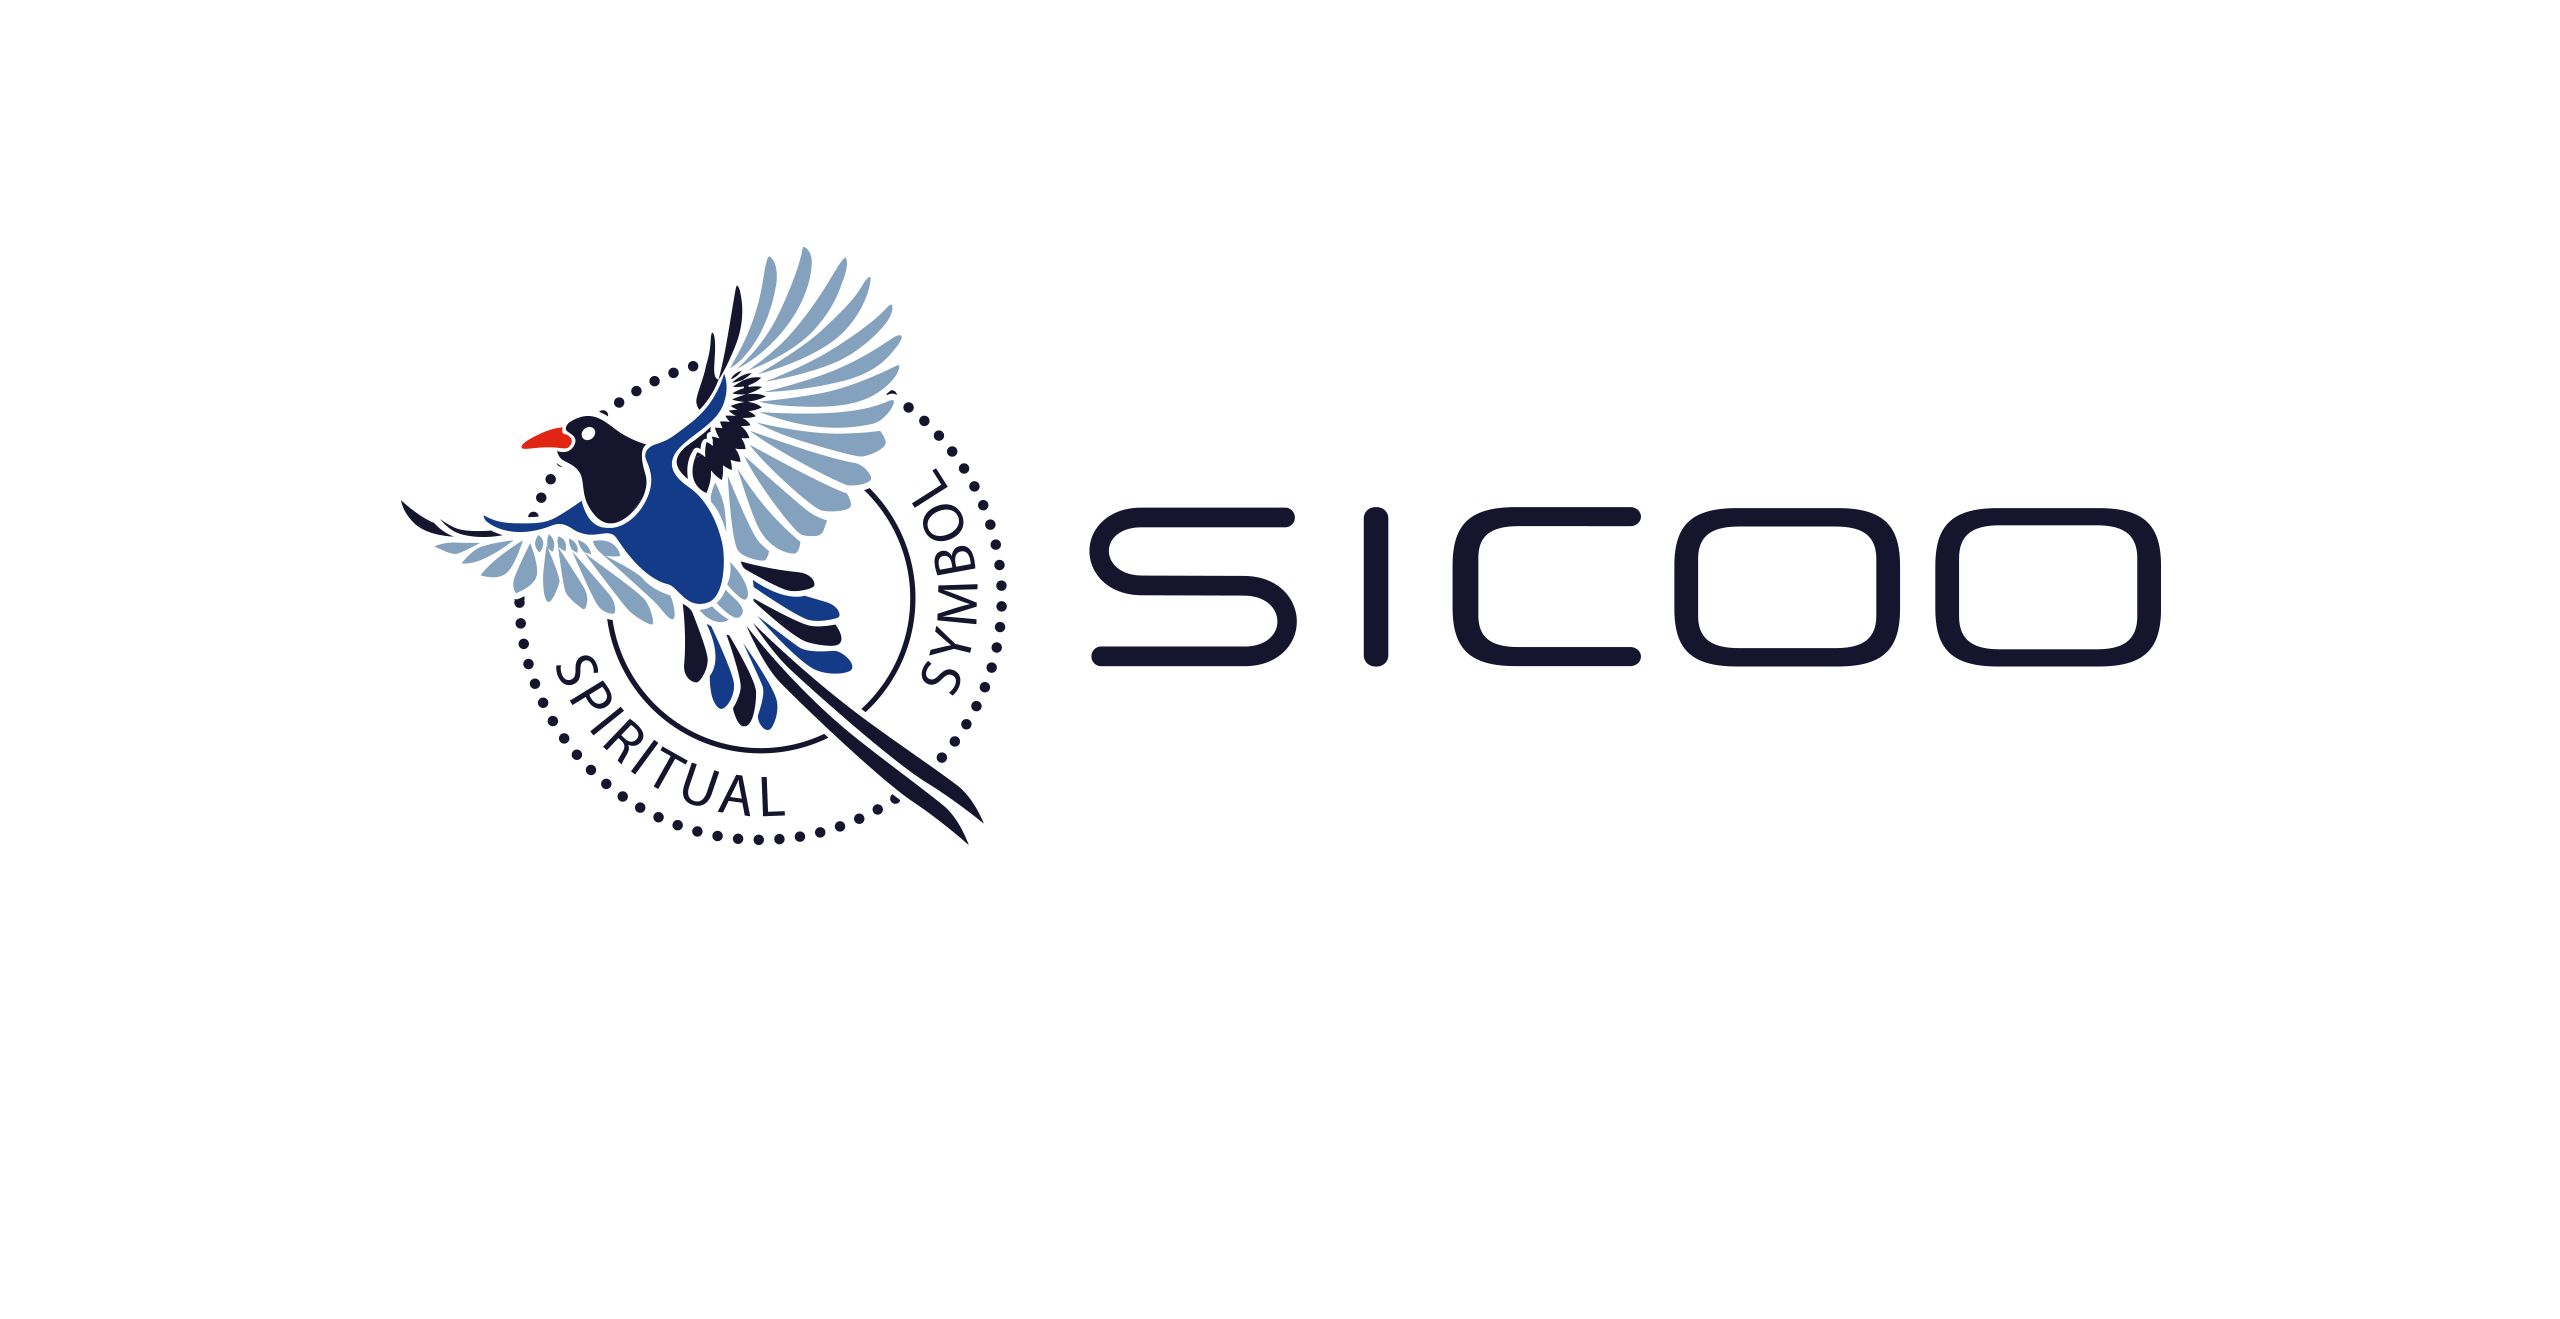 SICOO LOGO品牌識別優化與建立 [平面設計/品牌設計/logo設計/cis識別/vis設計]電腦版(1)